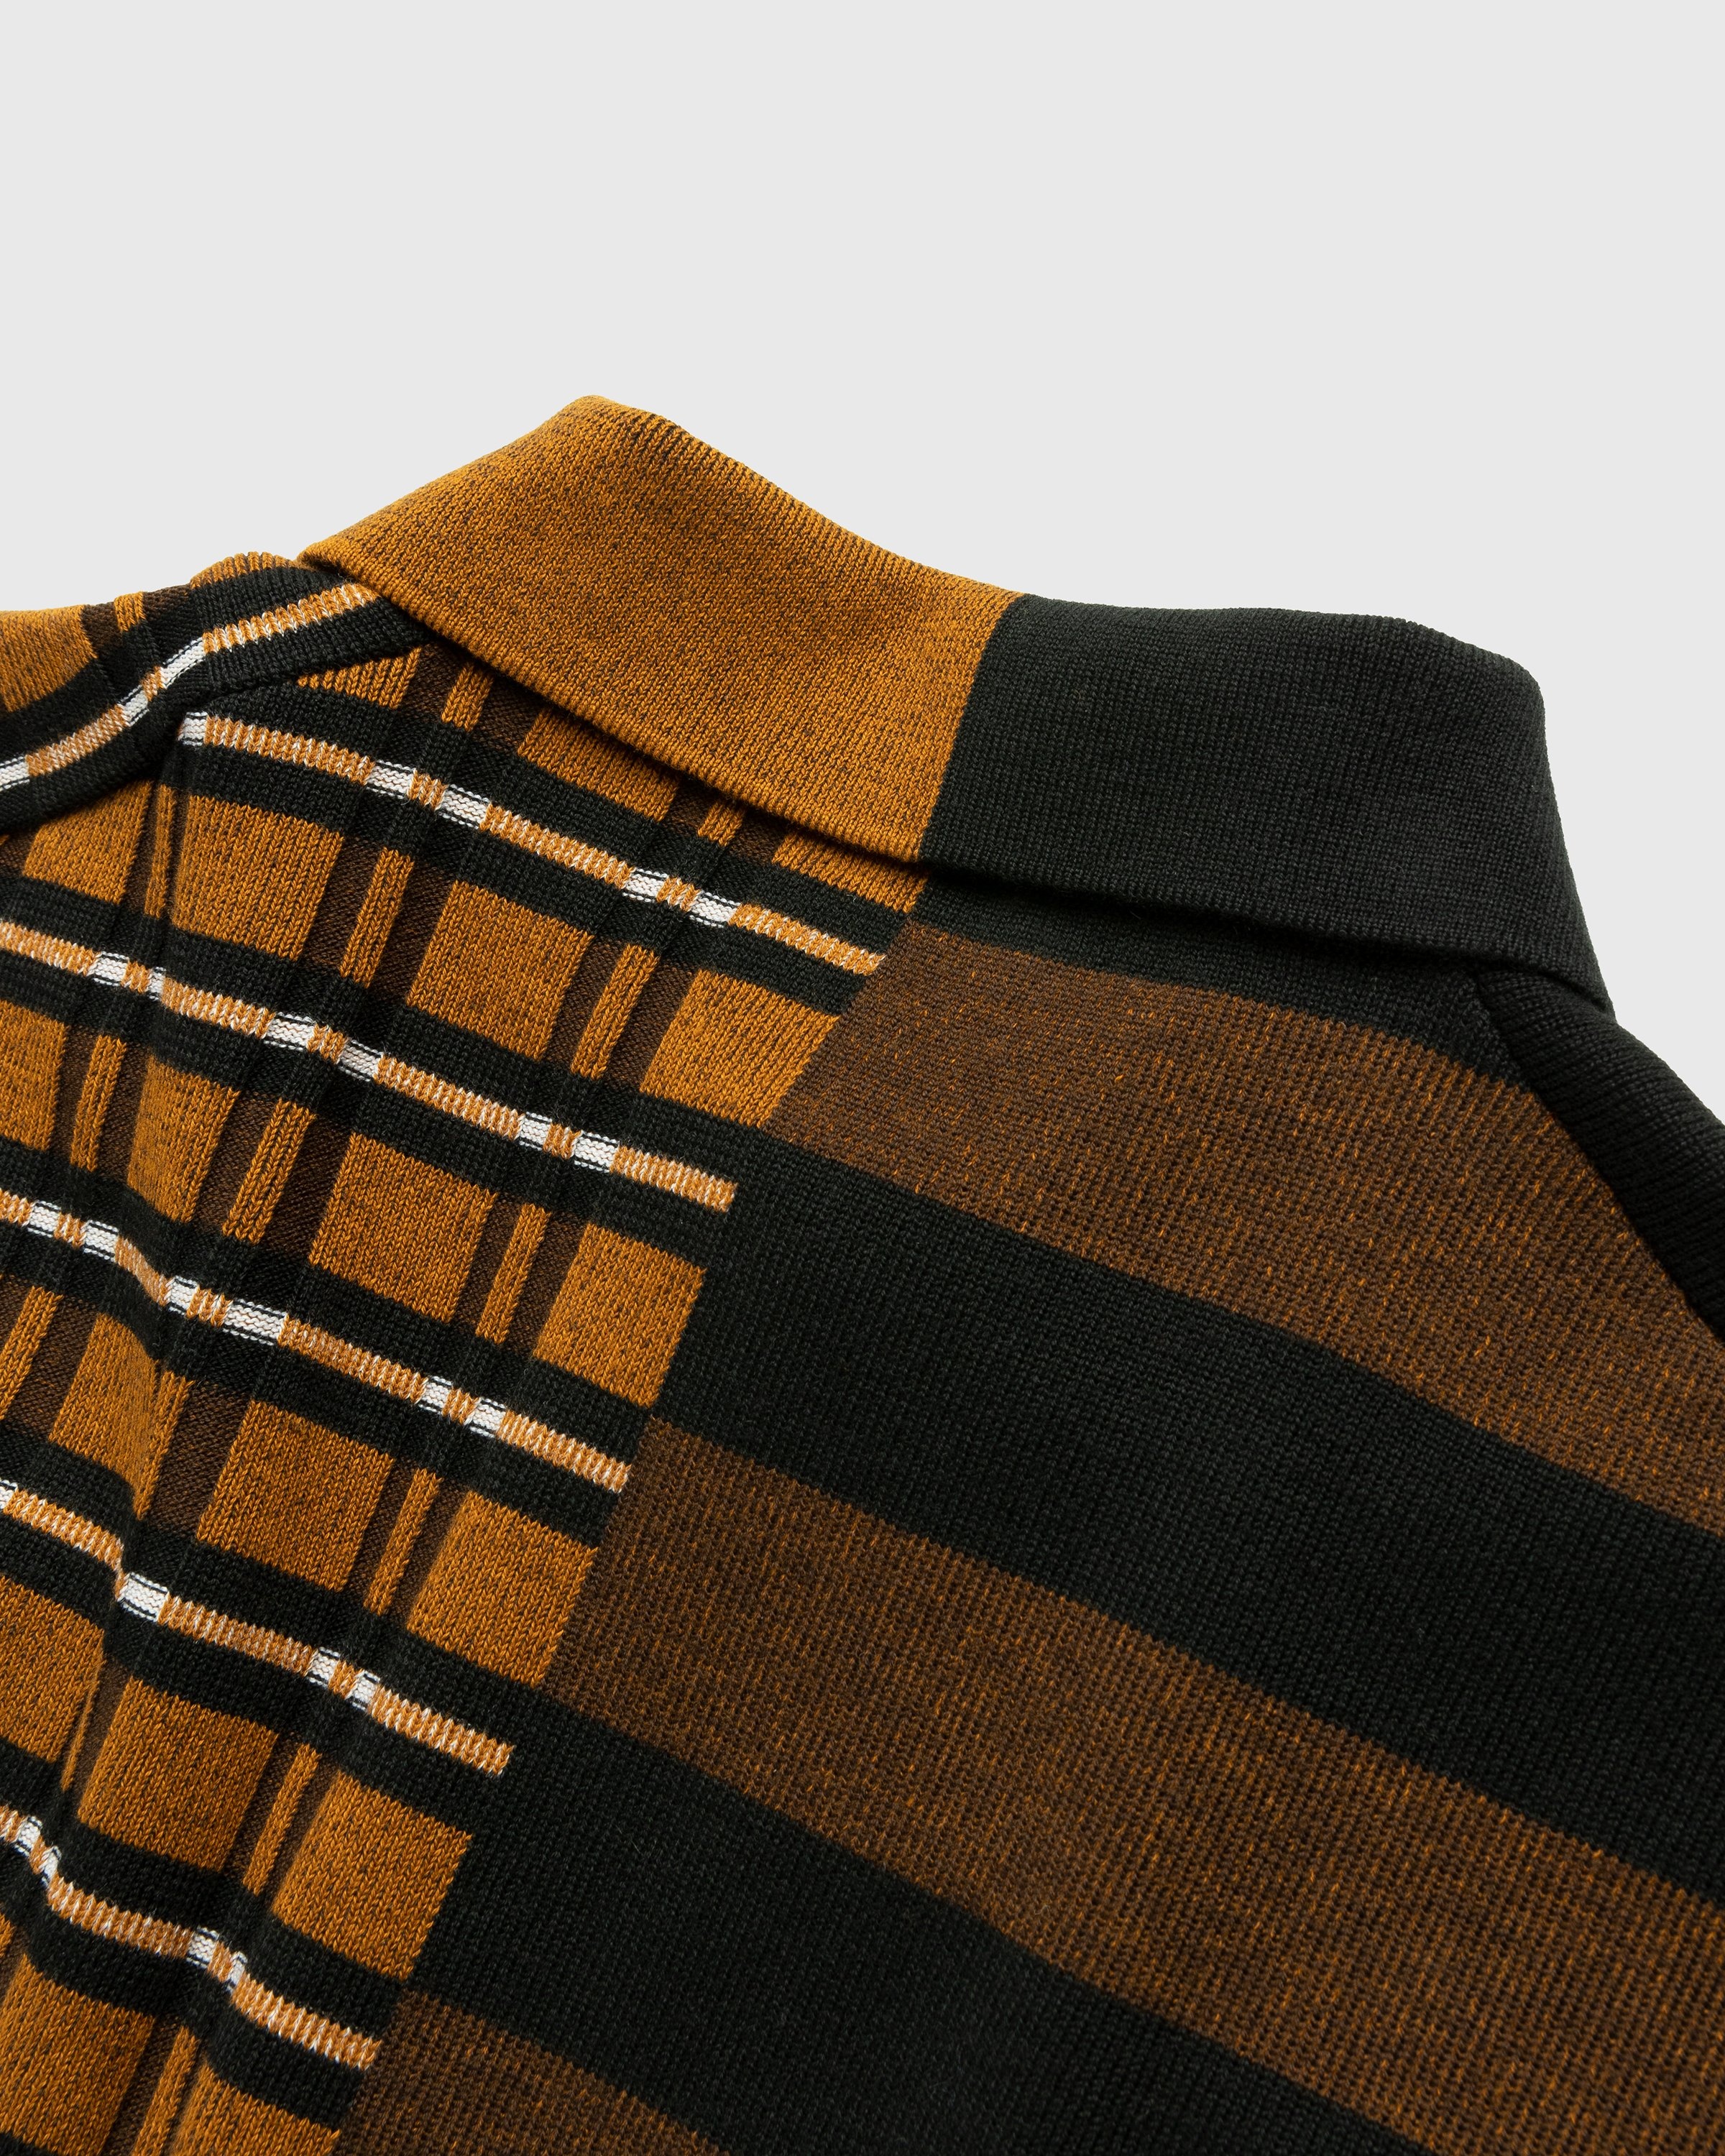 Kenzo – Striped Merino Wool Polo Dark Camel - Polos - Brown - Image 7